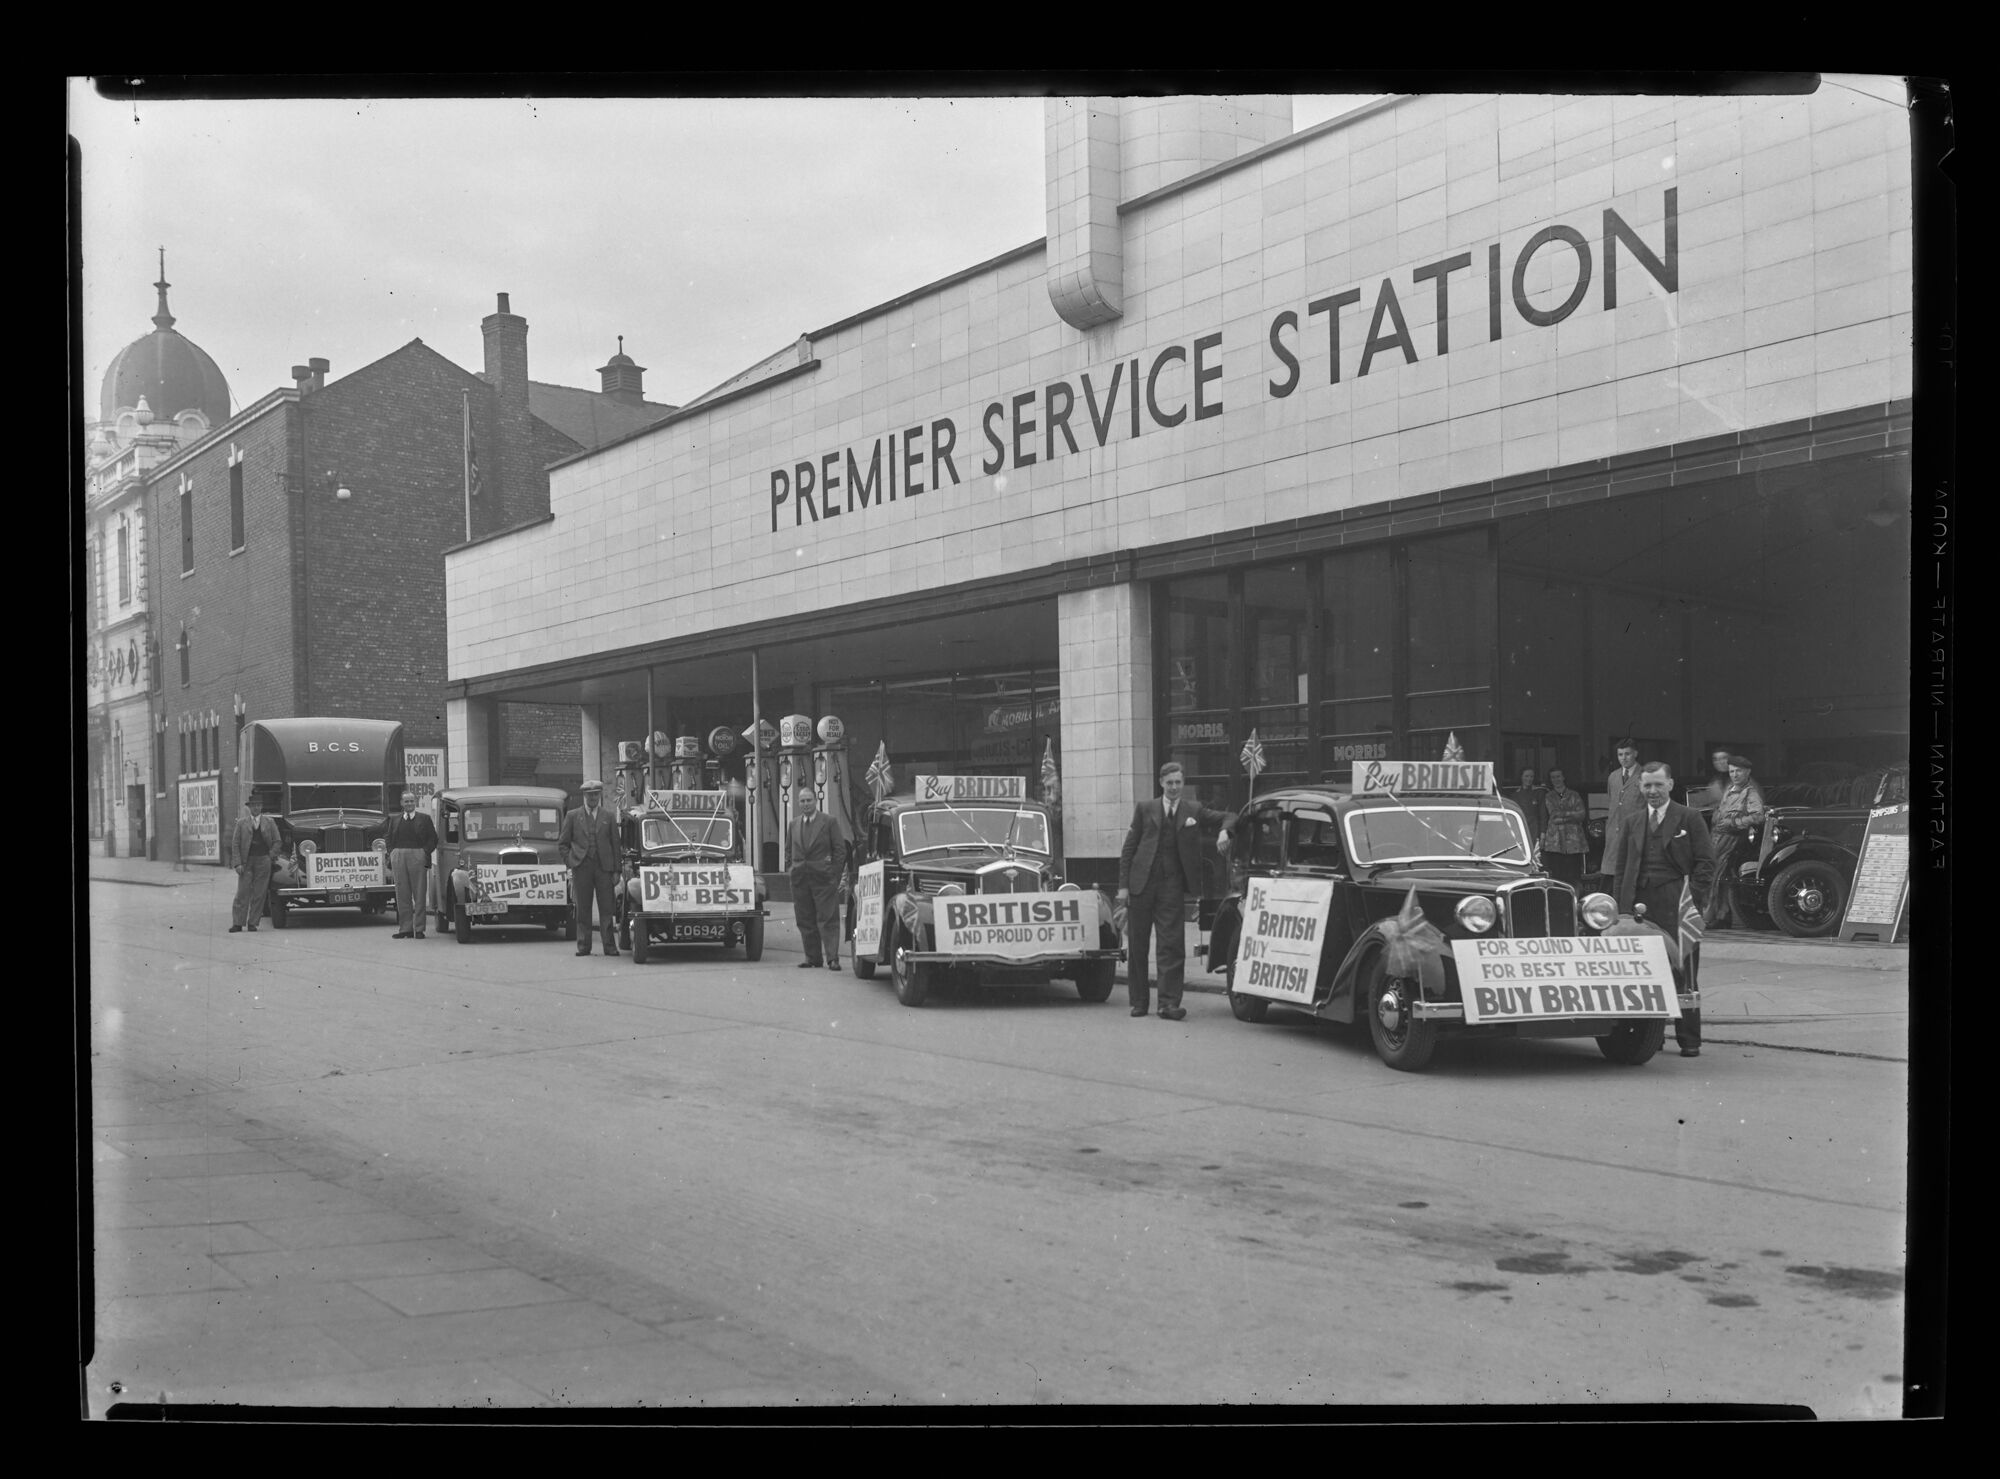 Premier Service Station, Rawlinson Street, Barrow-in-Furness